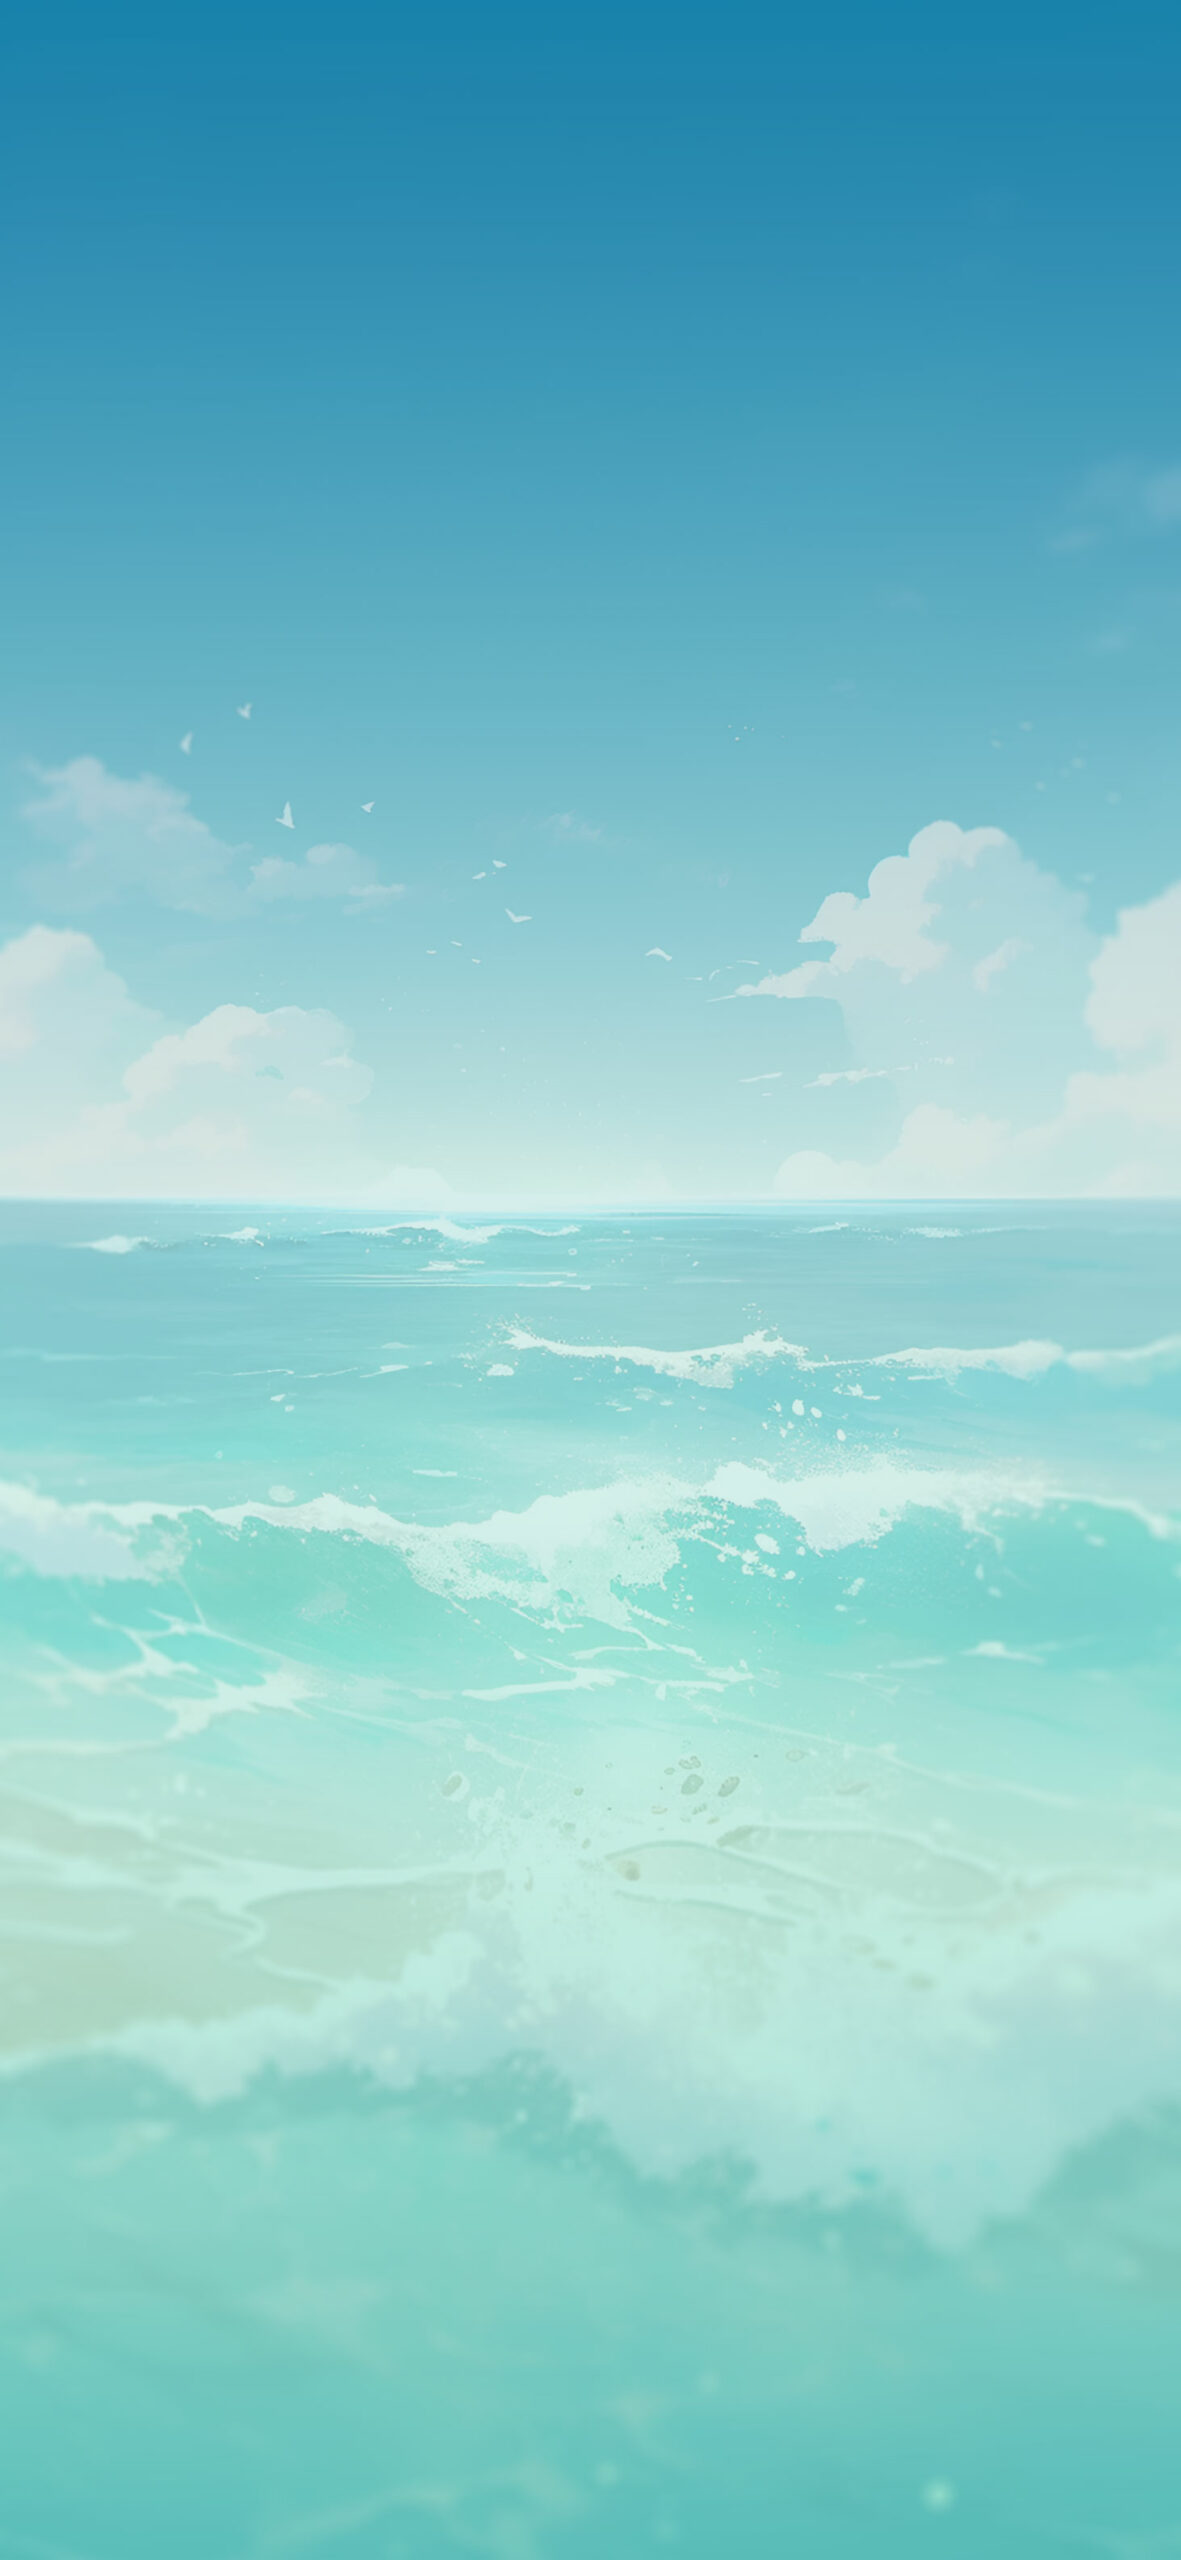 Aesthetric Turquoise Ocean & Clouds Wallpaper Aesthetric Ocean